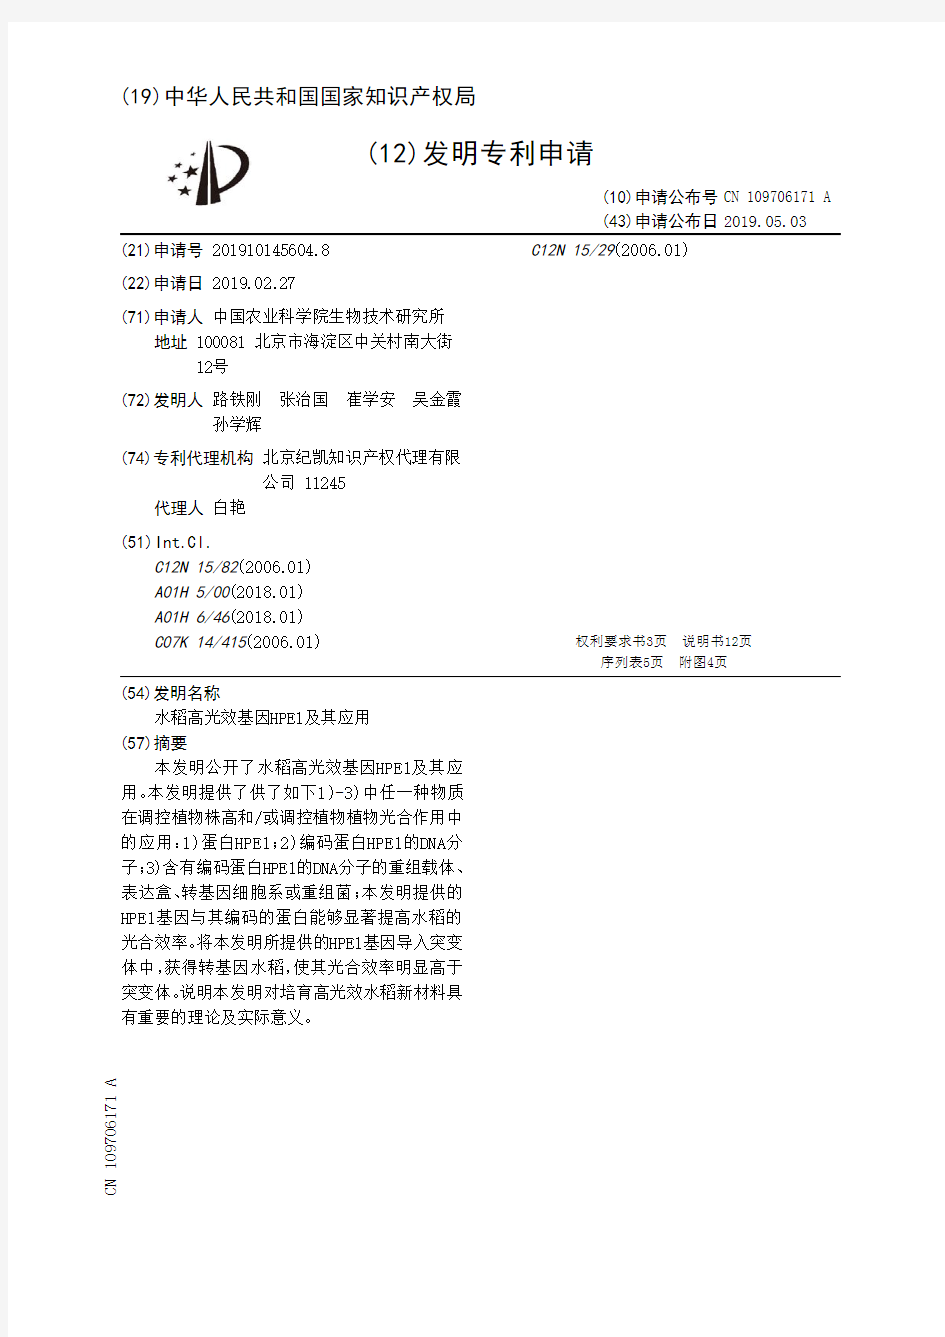 【CN109706171A】水稻高光效基因HPE1及其应用【专利】